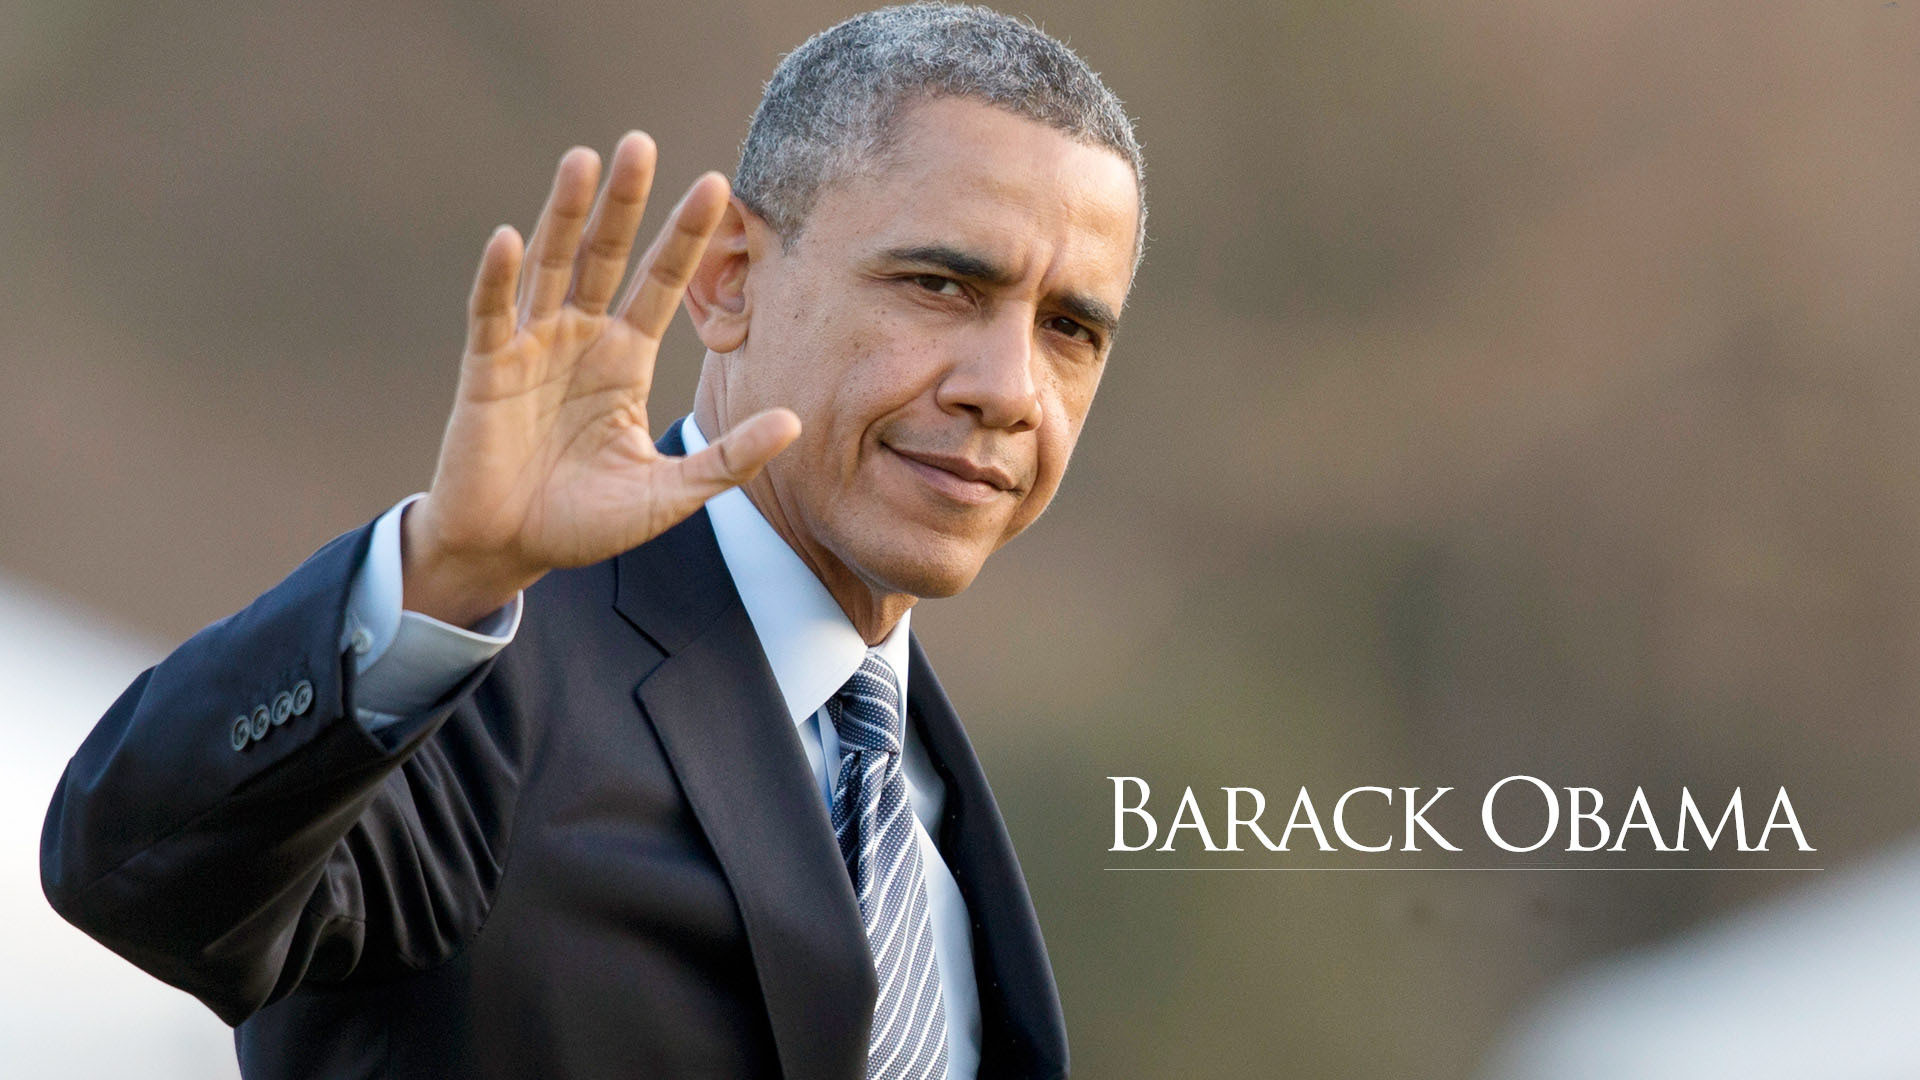 1920x1080 Barack Obama in Suits 4k Ultra HD Images